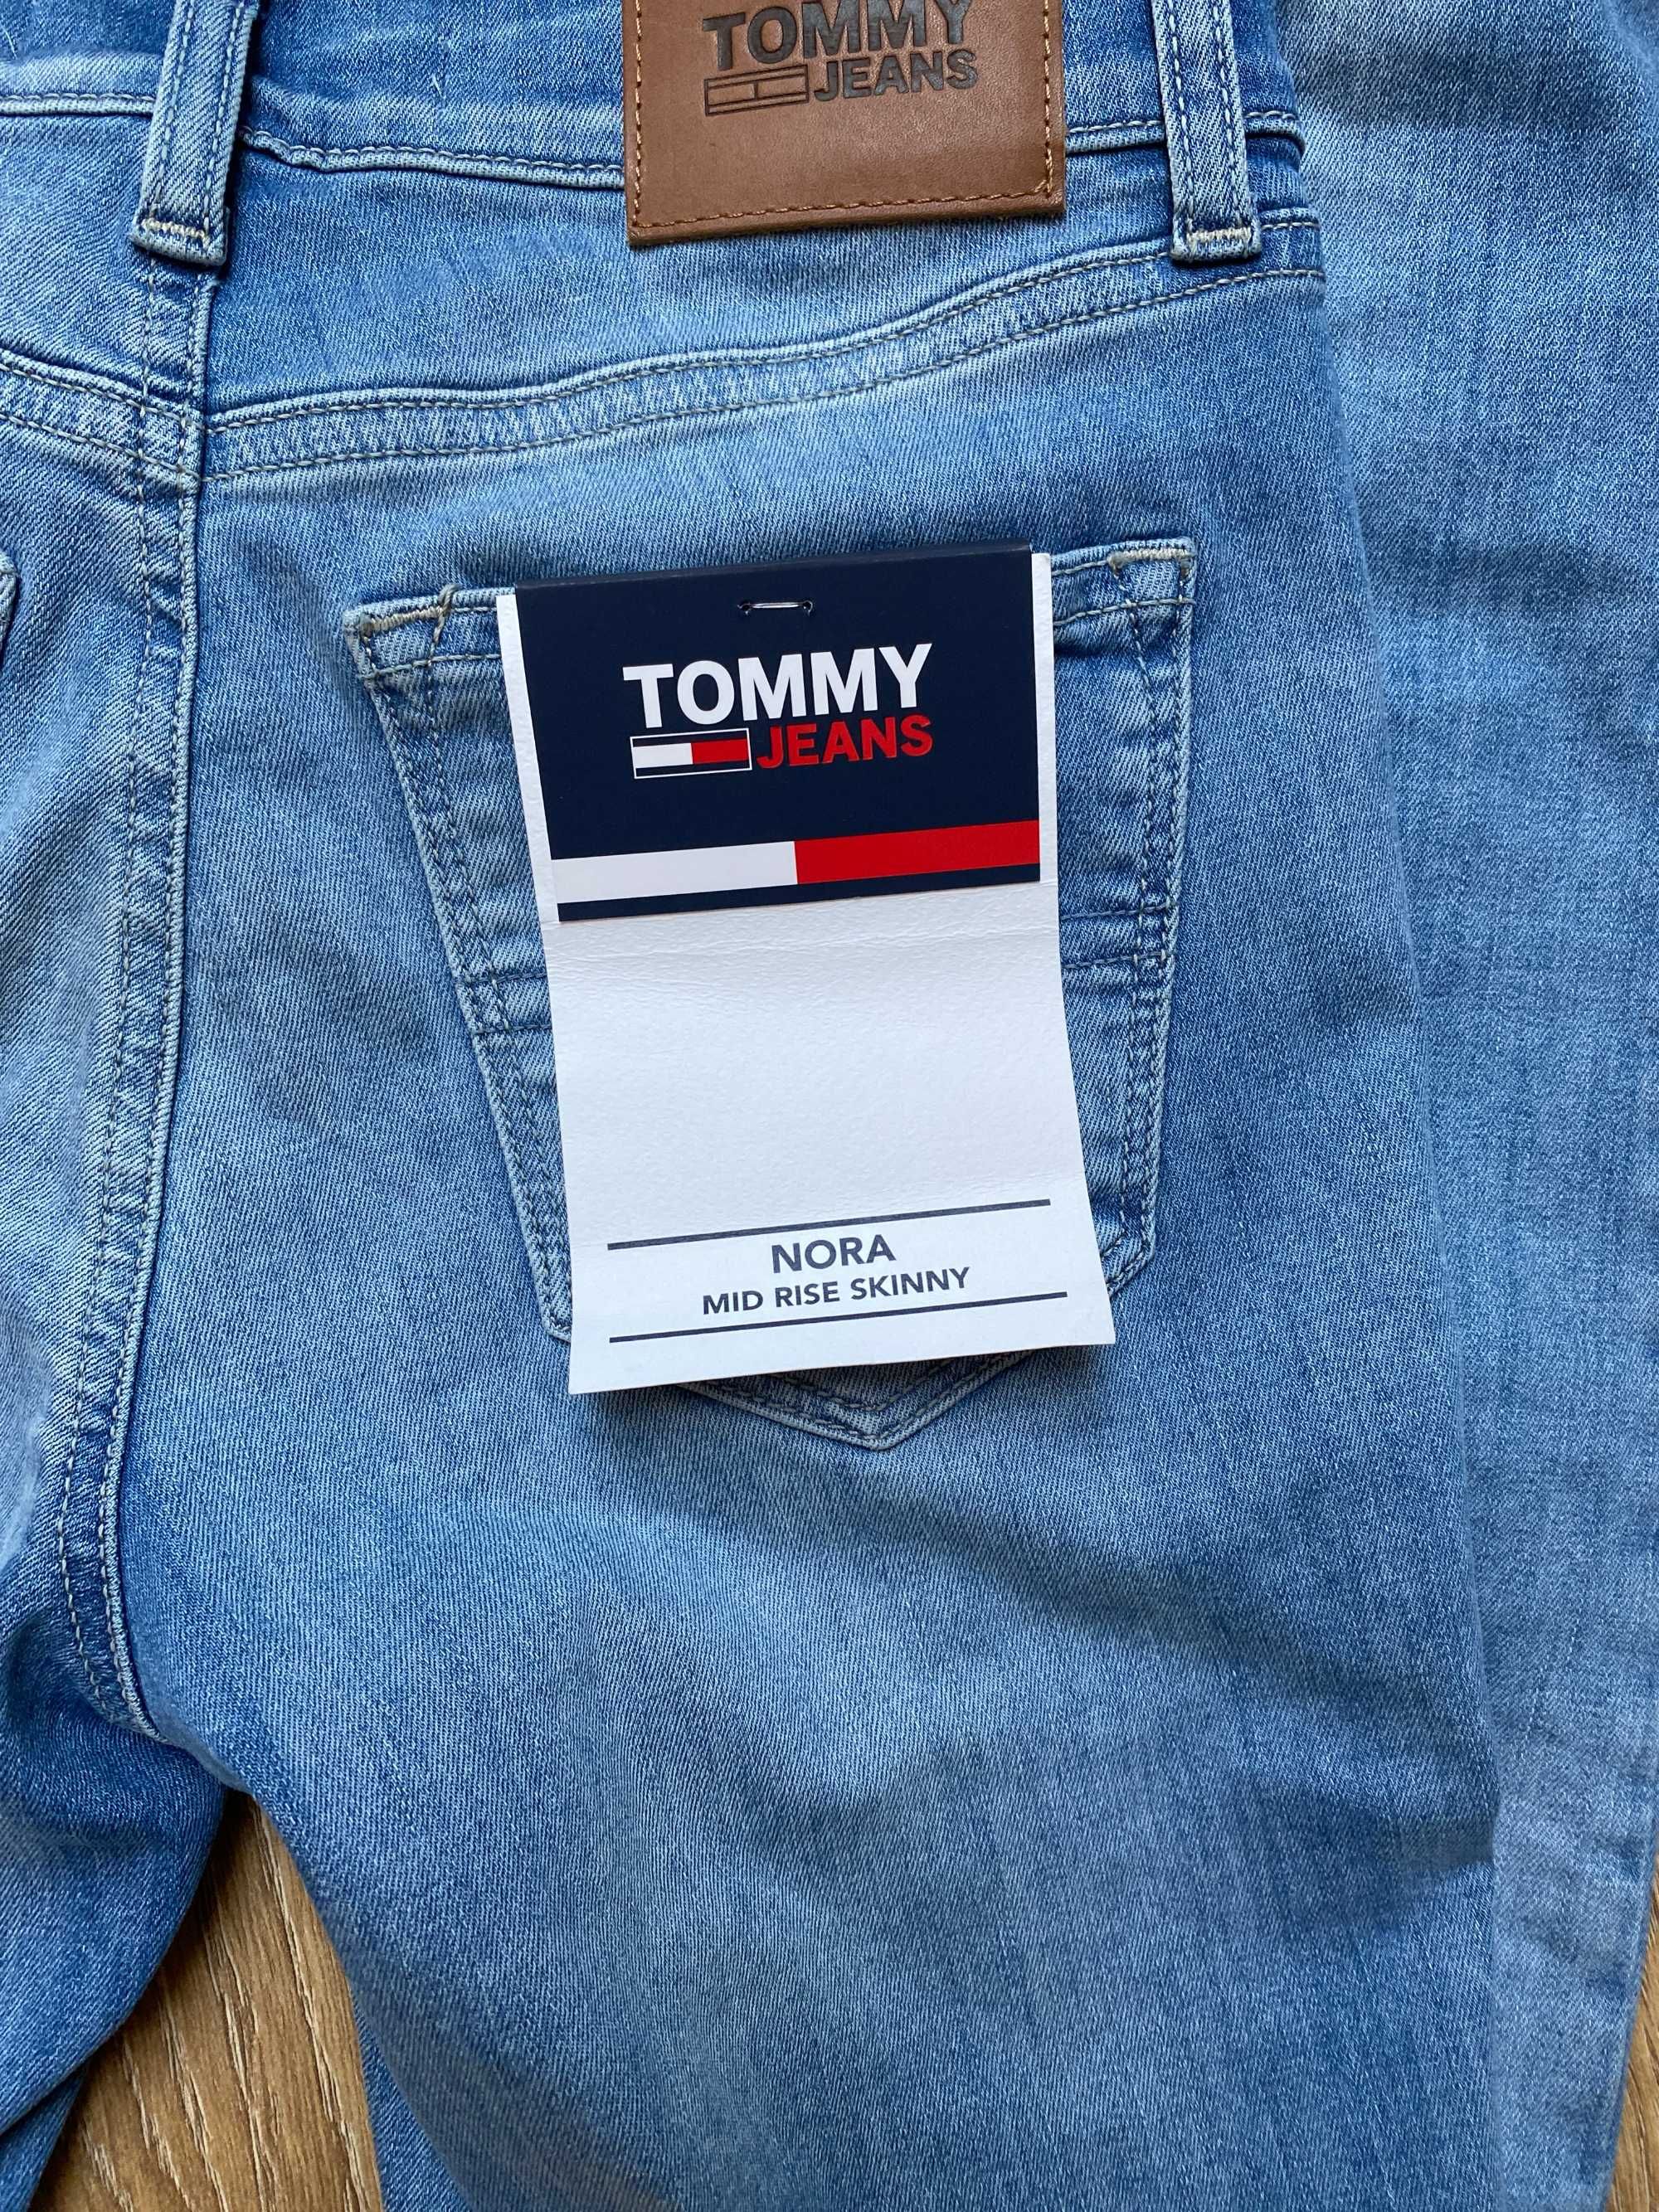 Tommy Hilfiger Jeans roz 25/32